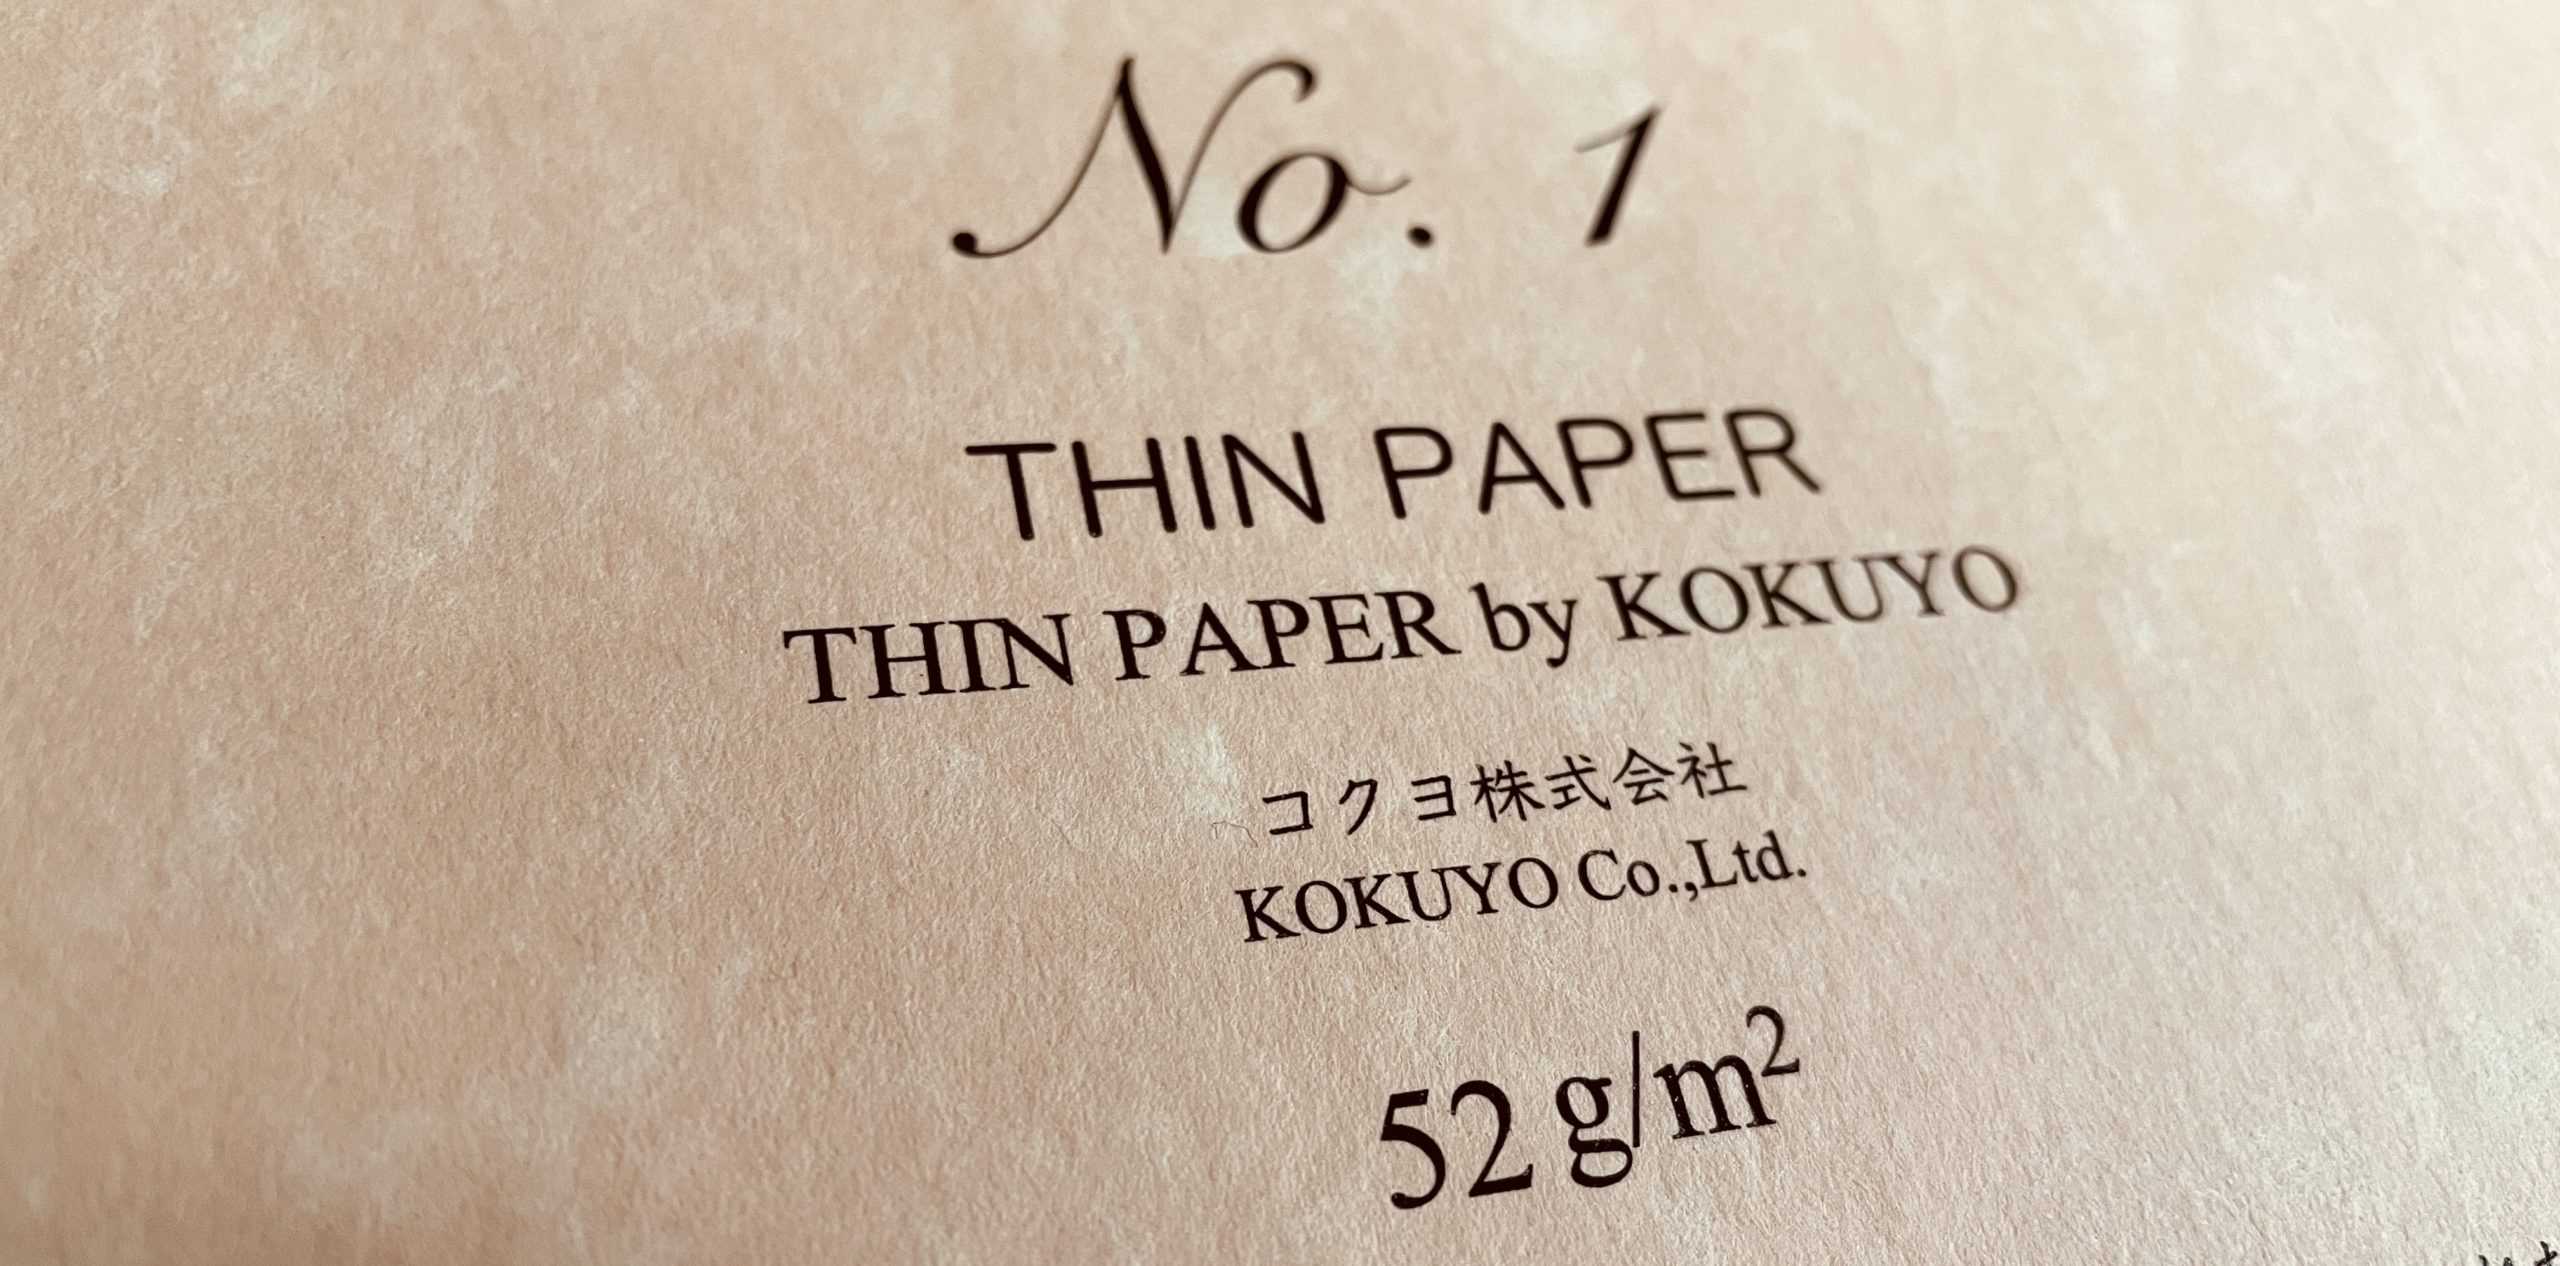 Kokuyo Thin Paper